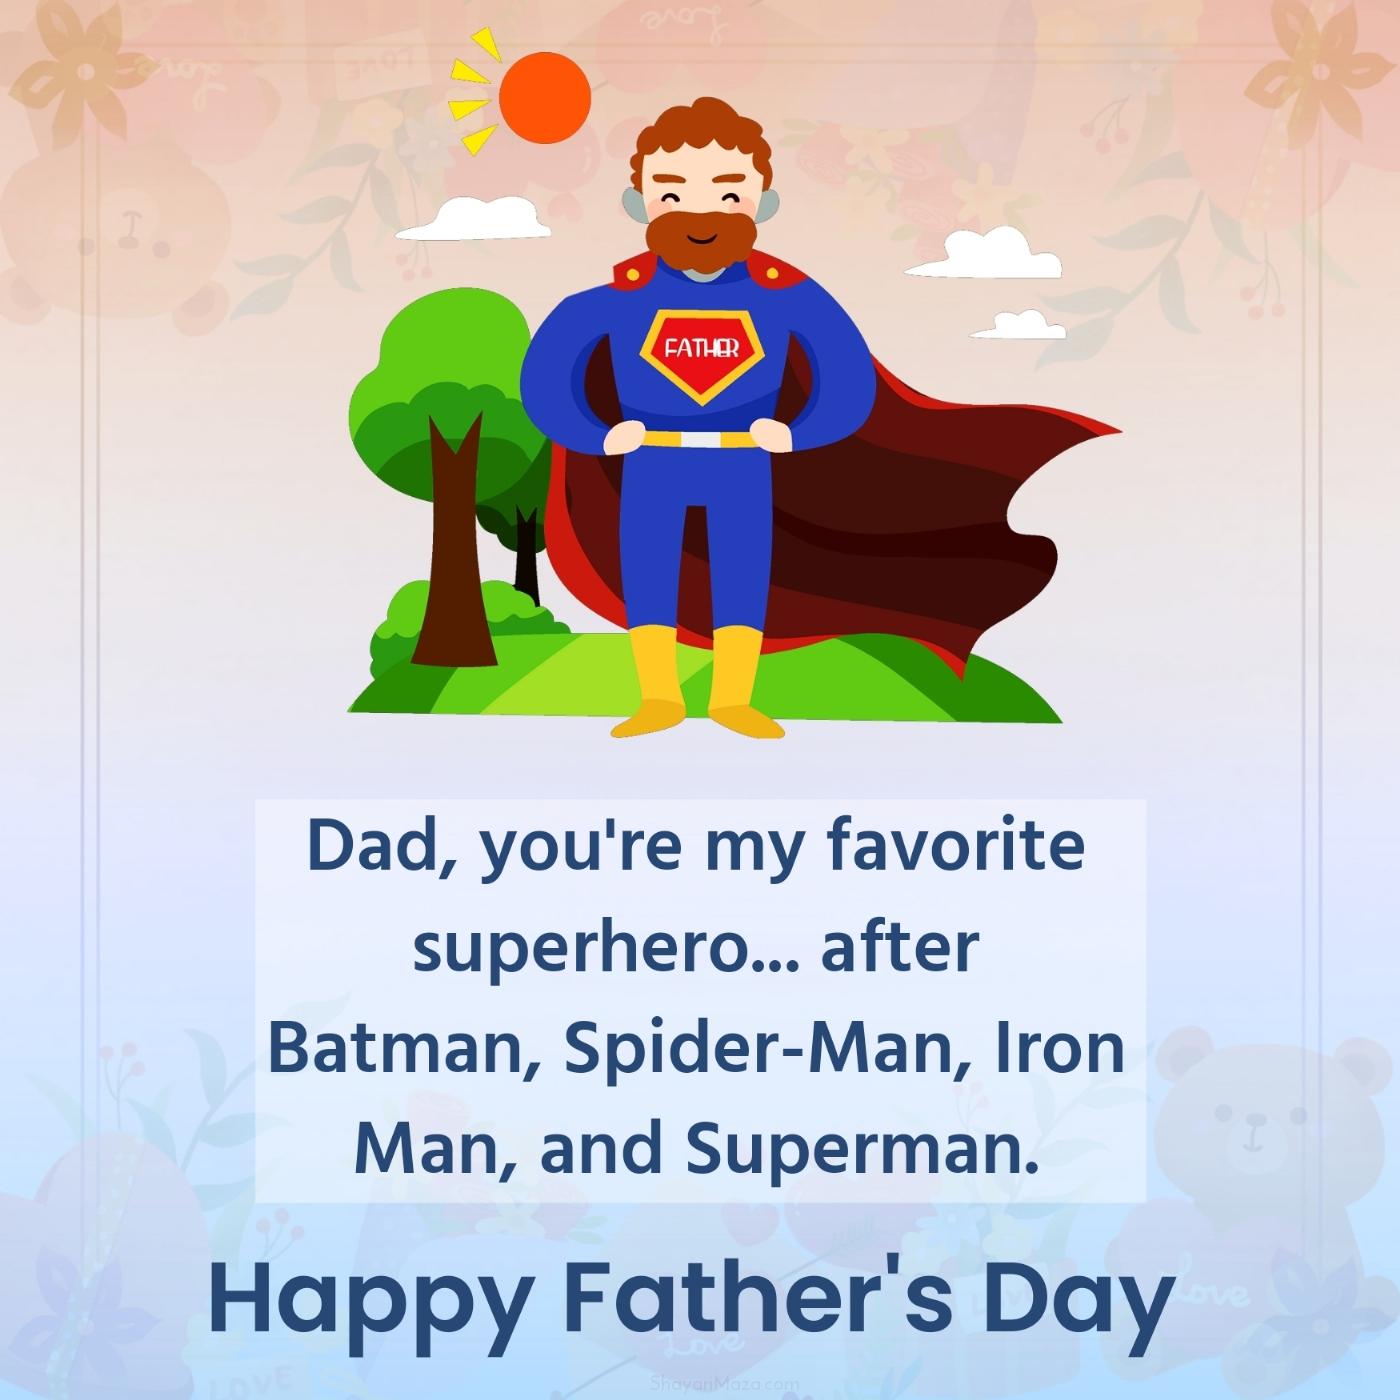 Dad you're my favorite superhero after Batman